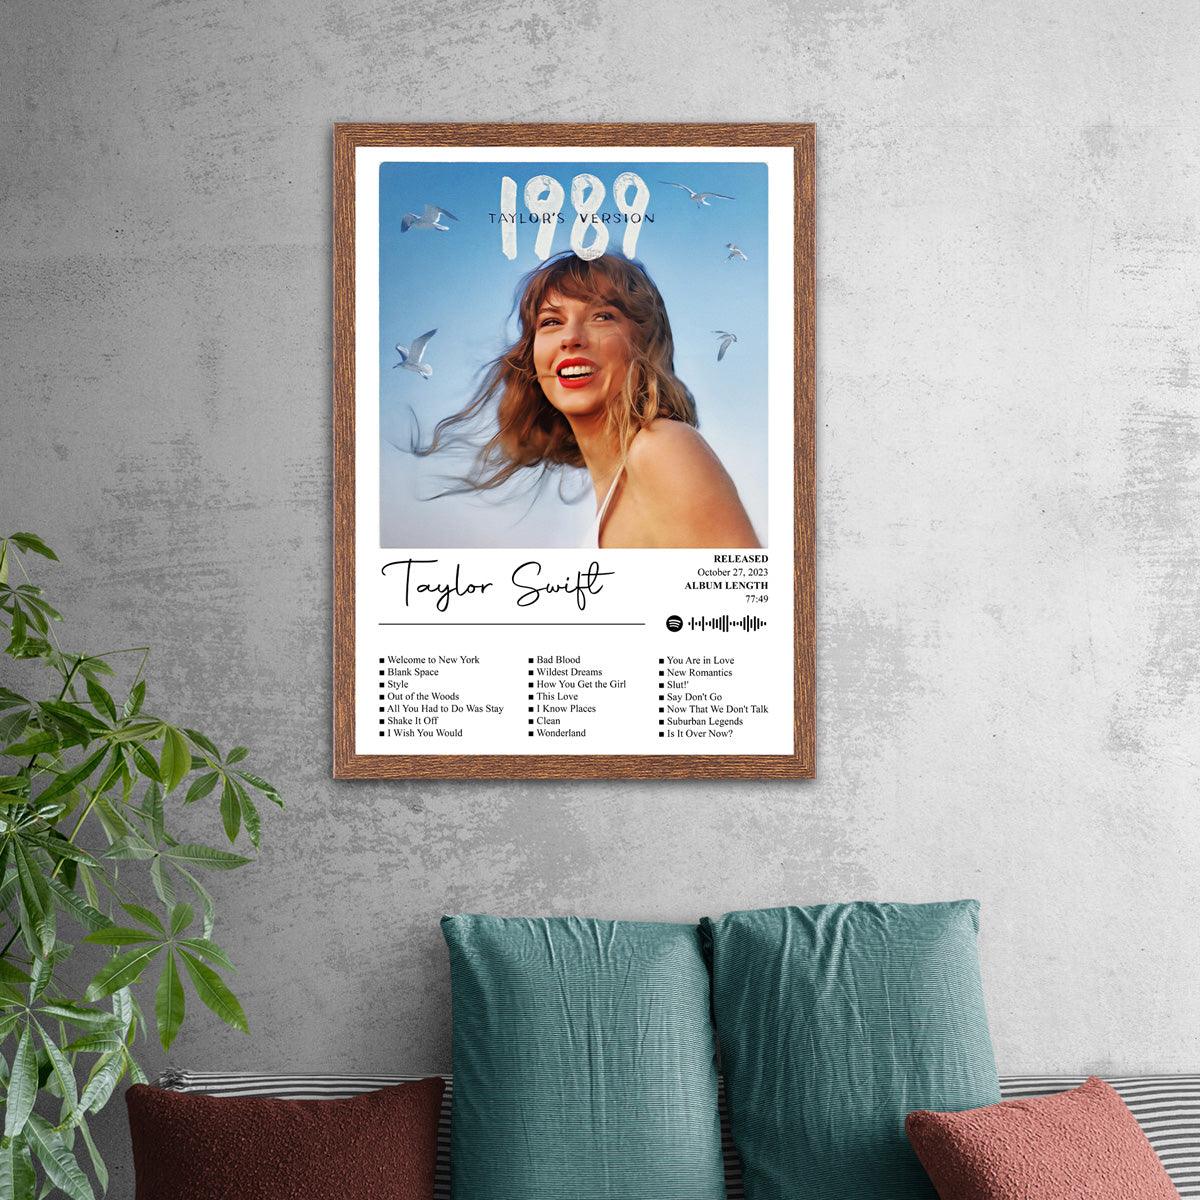 Taylor Swift's "1989" - HD Metal Print - PixMagic